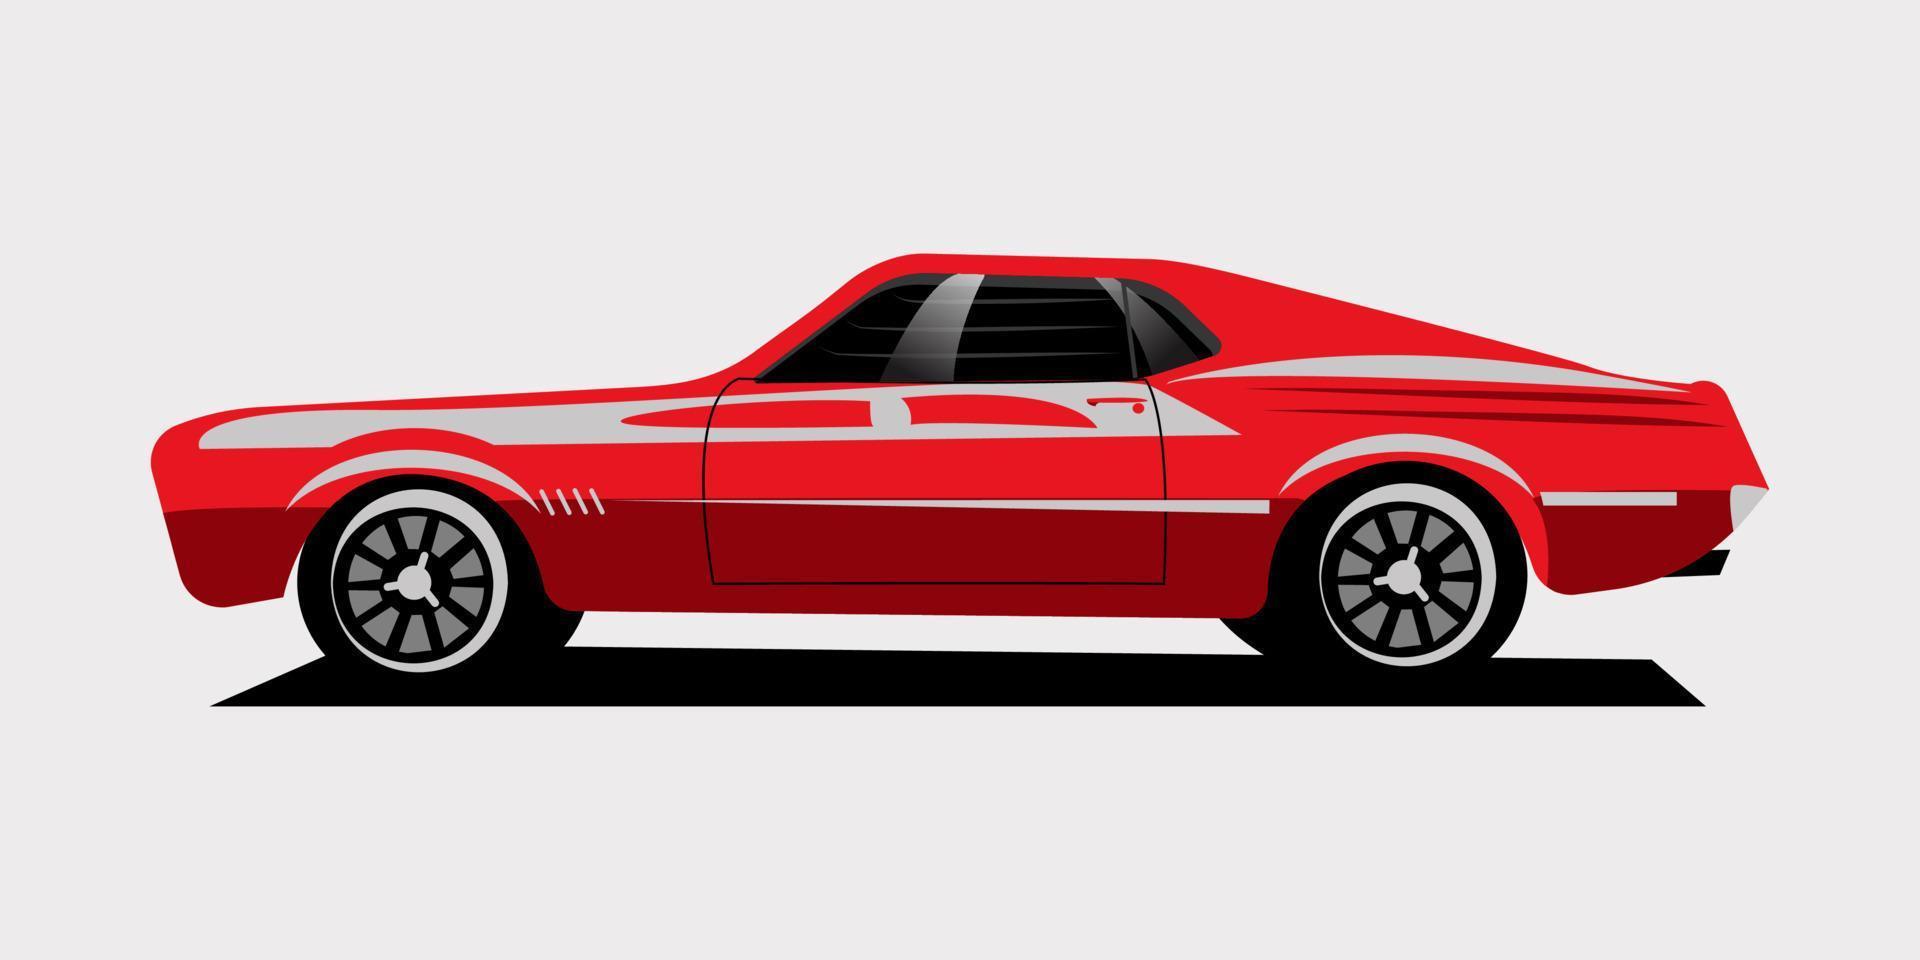 vintage röd bil på en vit bakgrund, vektorillustration. vektor